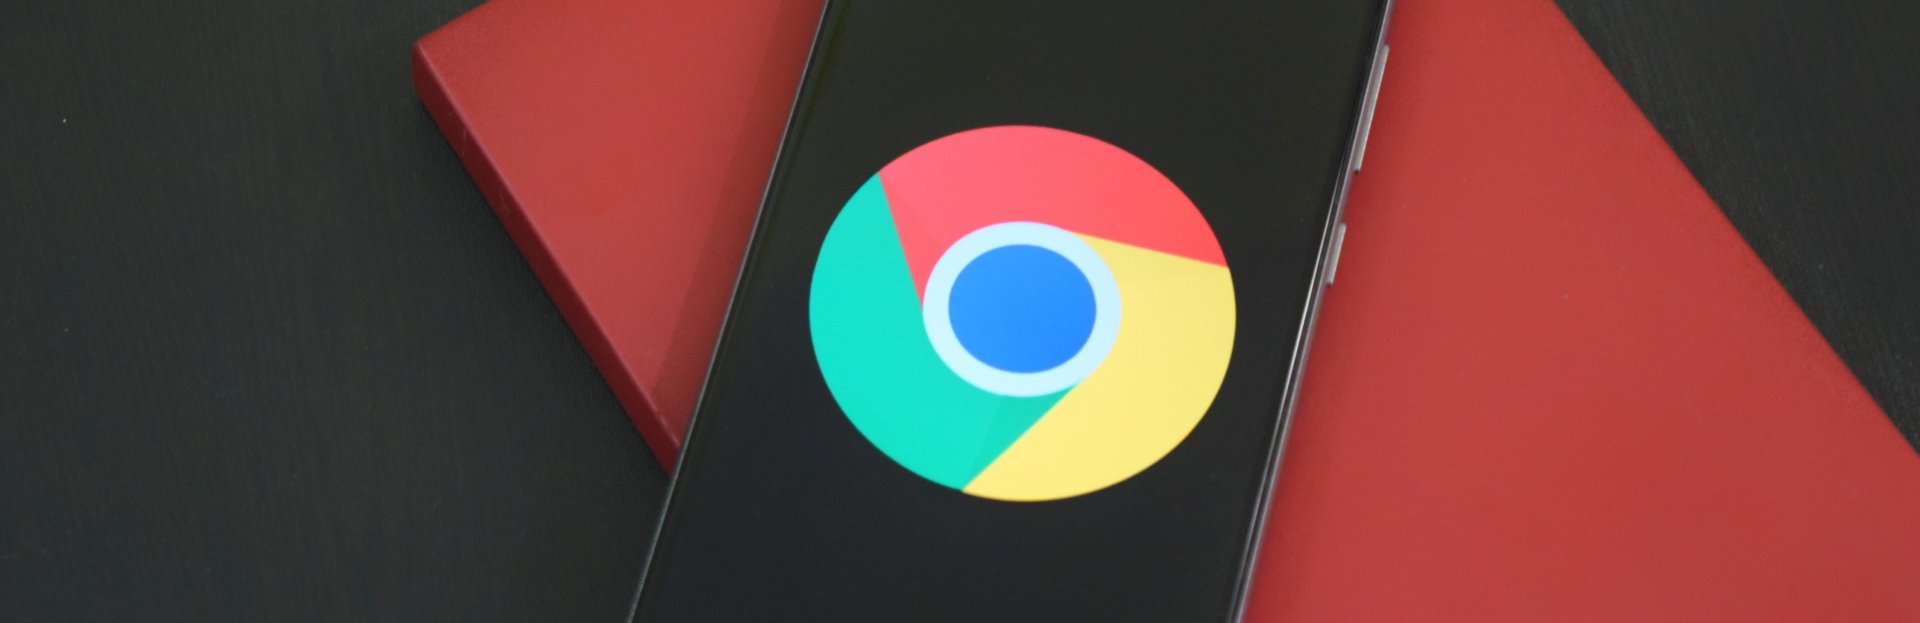 Icono de Chrome en un smartphone